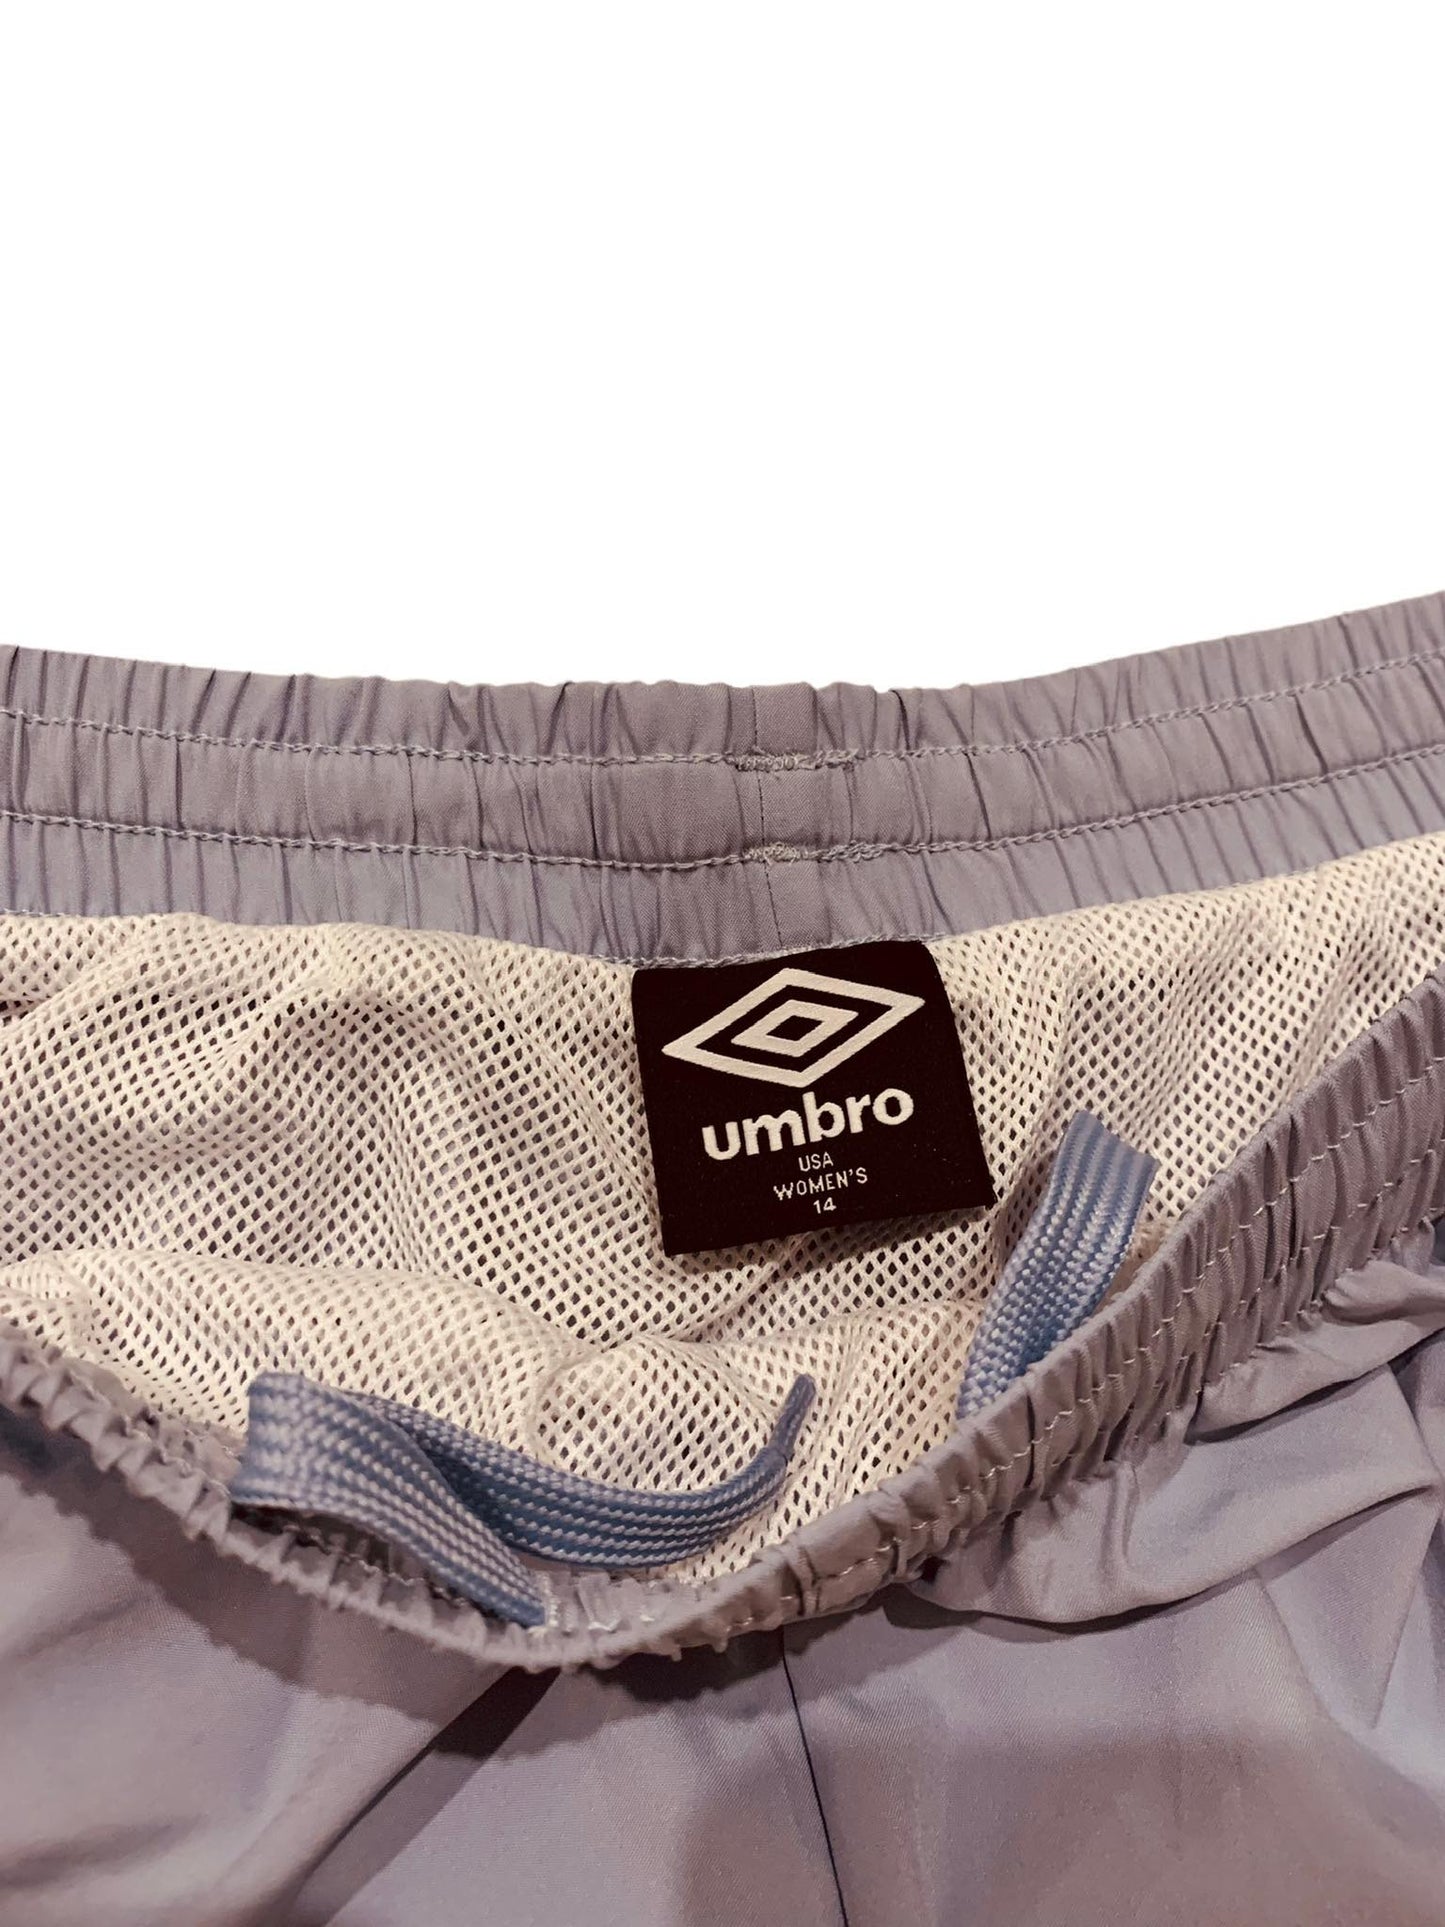 Brisbane Roar Umbro Shorts (Medium)